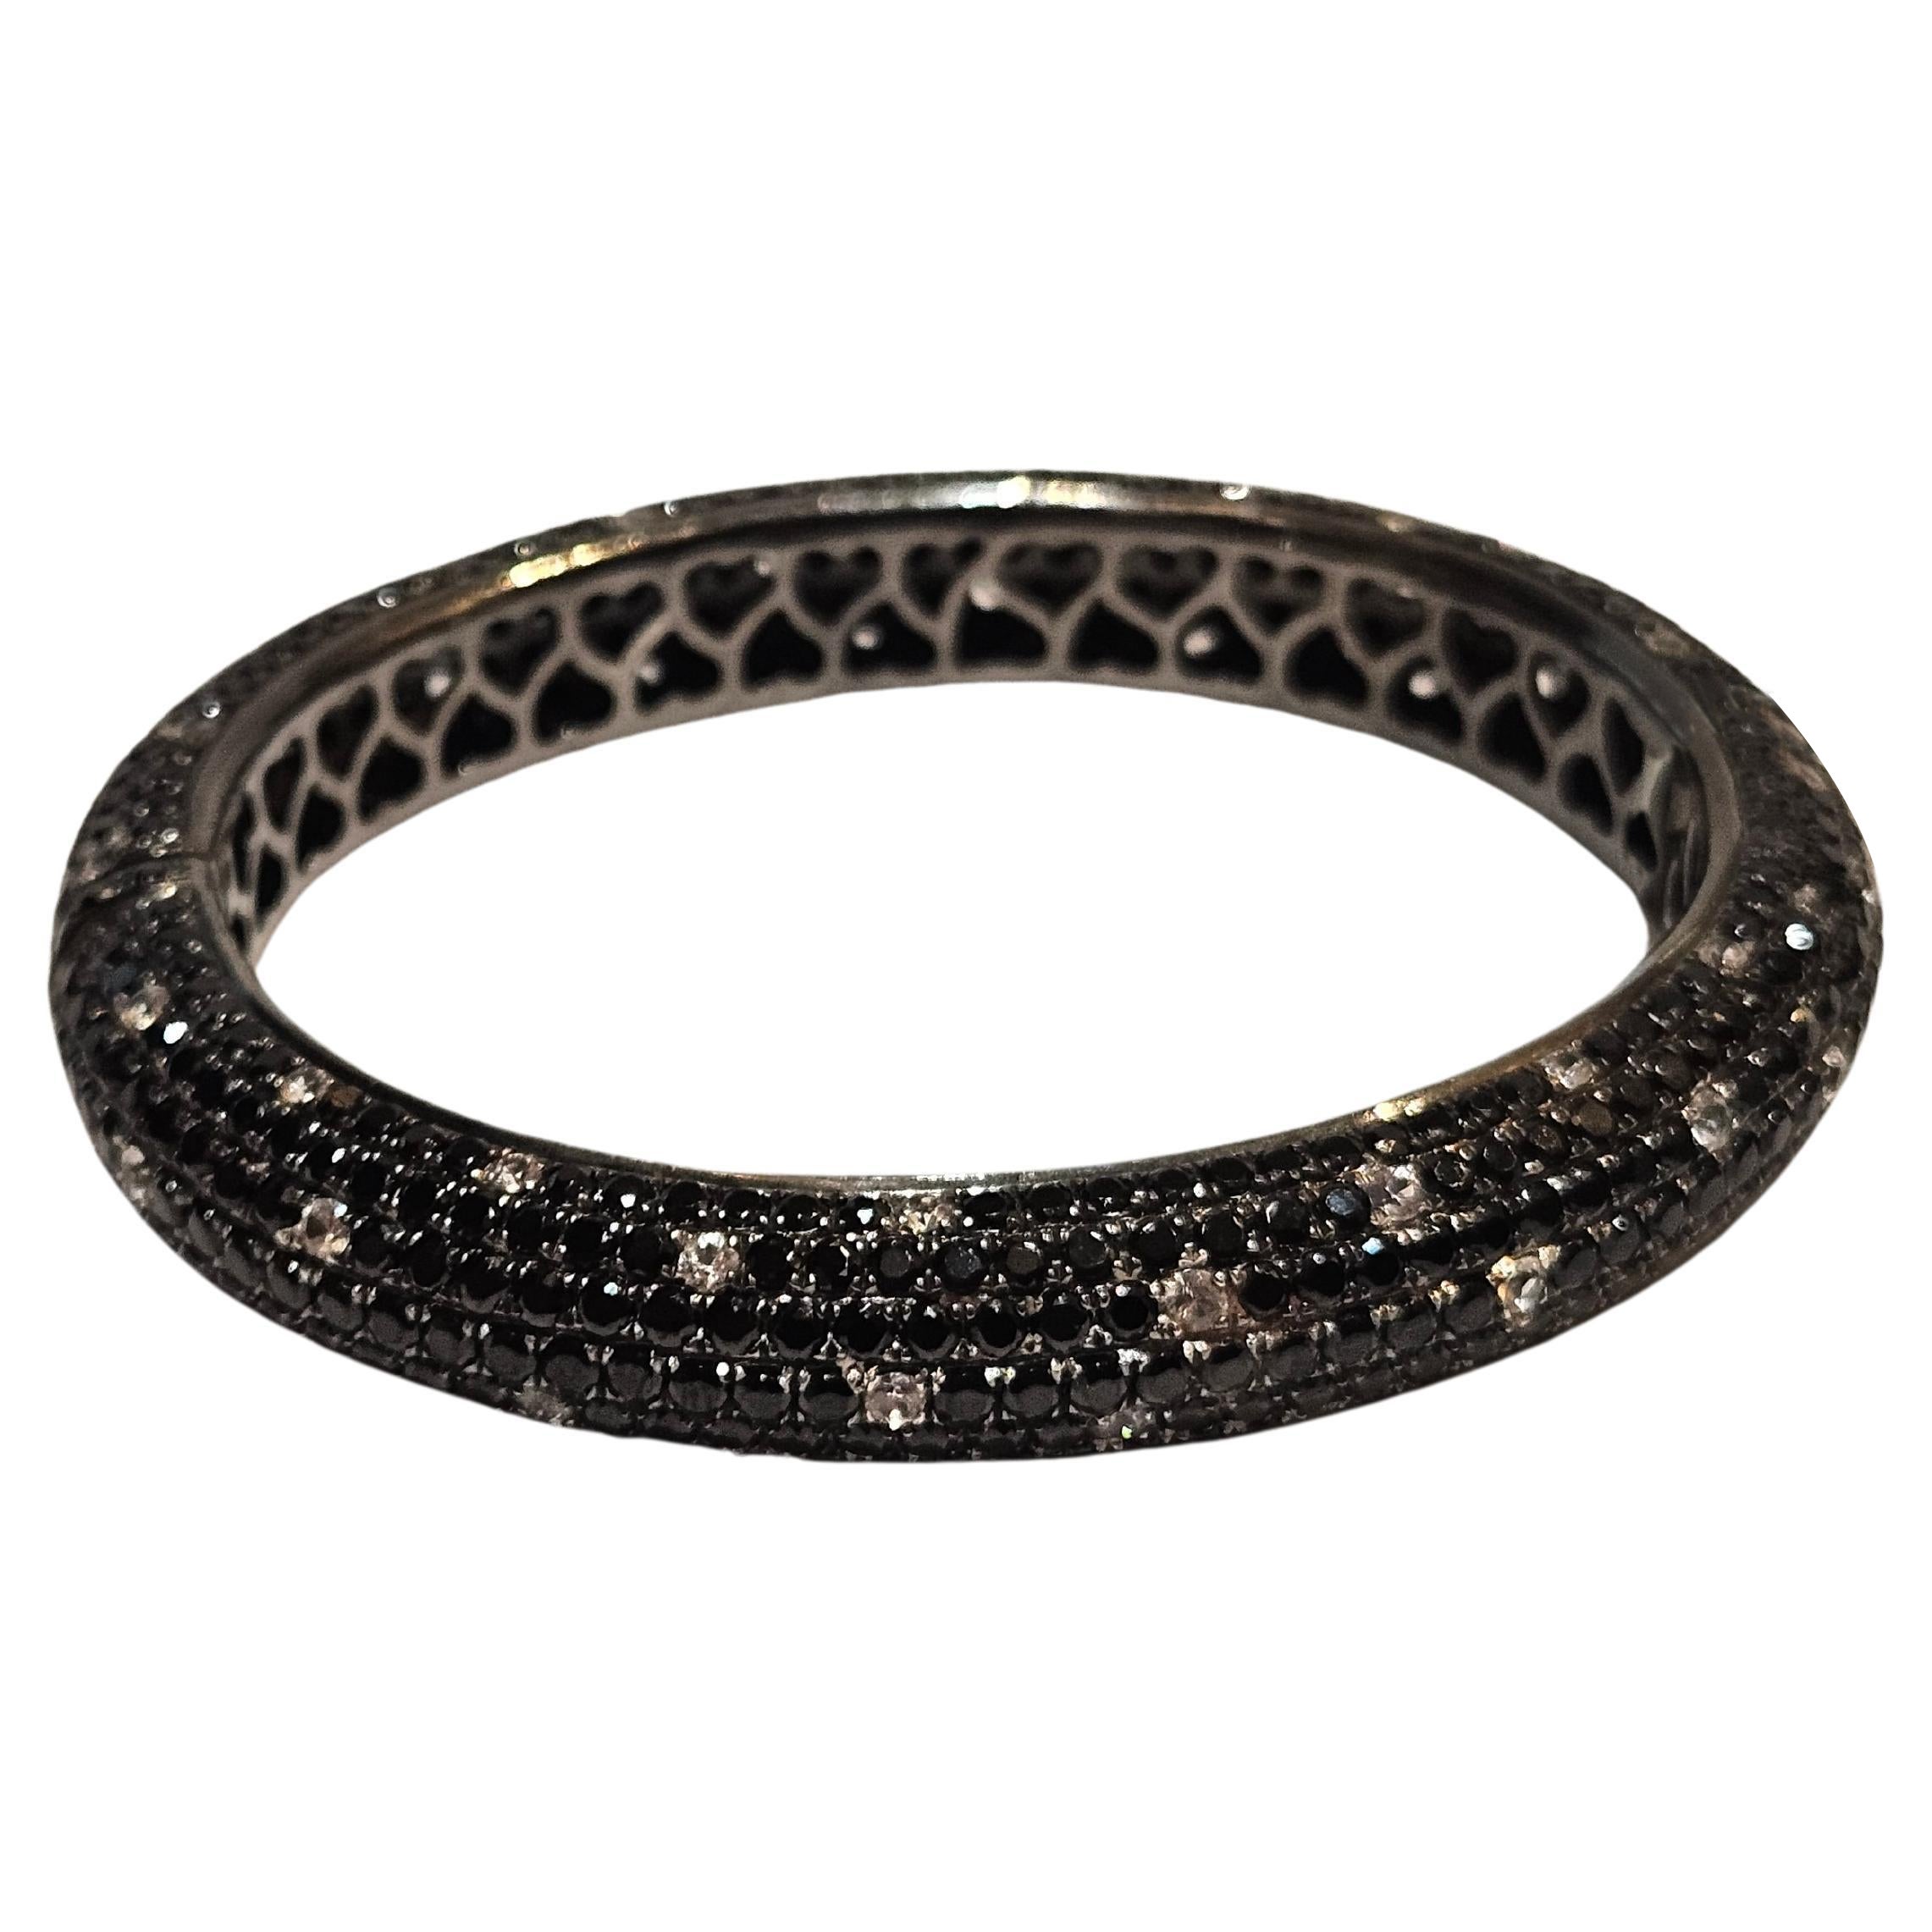 NWT $5, 900 Fancy Glittering 26CT Black White Sapphire Bracelet Bangle Cuff